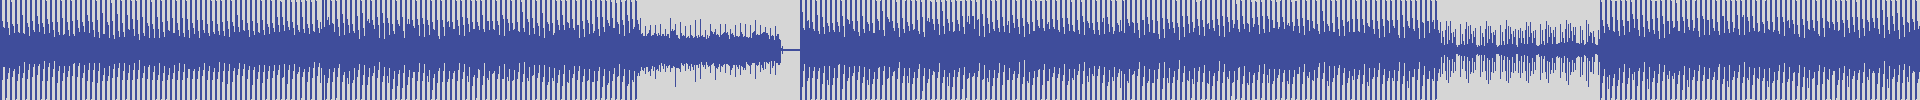 nf_boyz_records [NFY071] Light Data - Amsterdam Nights [Pel & Hato Mix] audio wave form